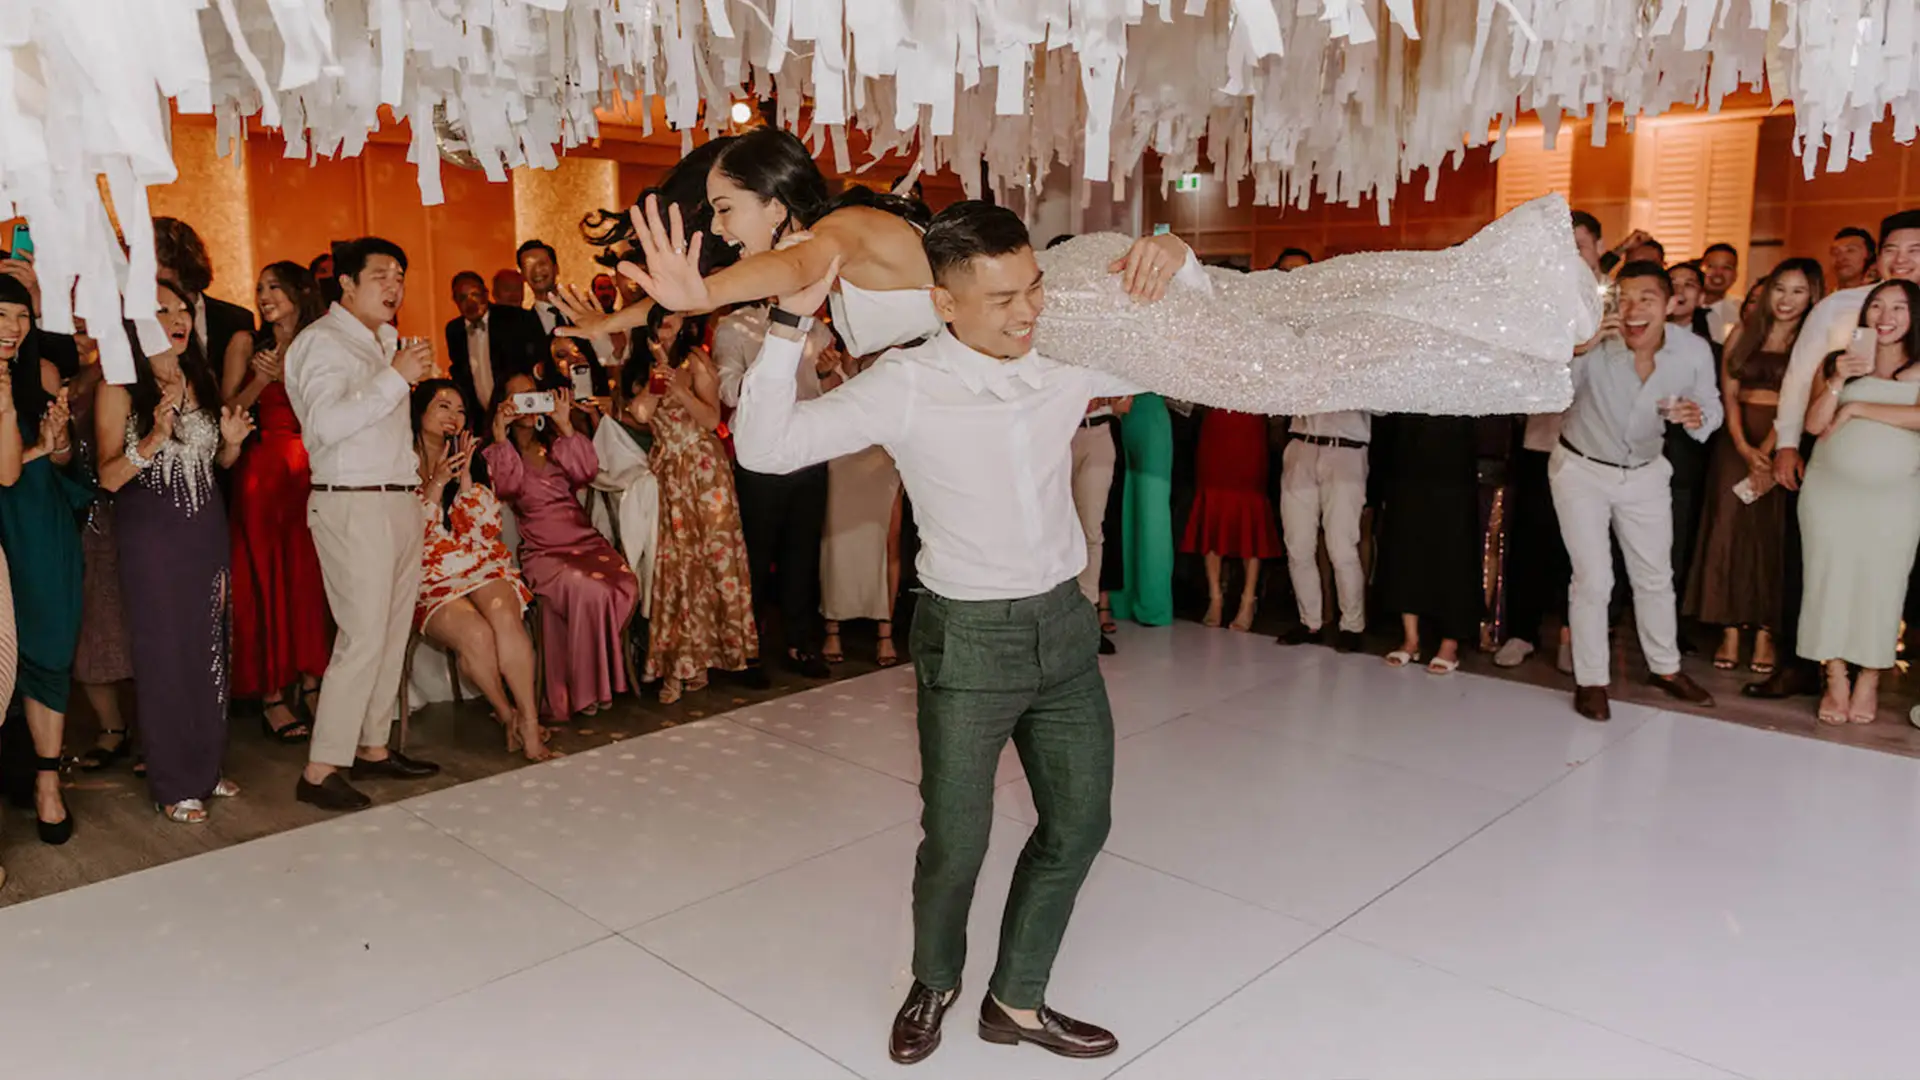 Lucy Suze Celebrant Wedding Dance with Groom Swinging Bride across Shoulders